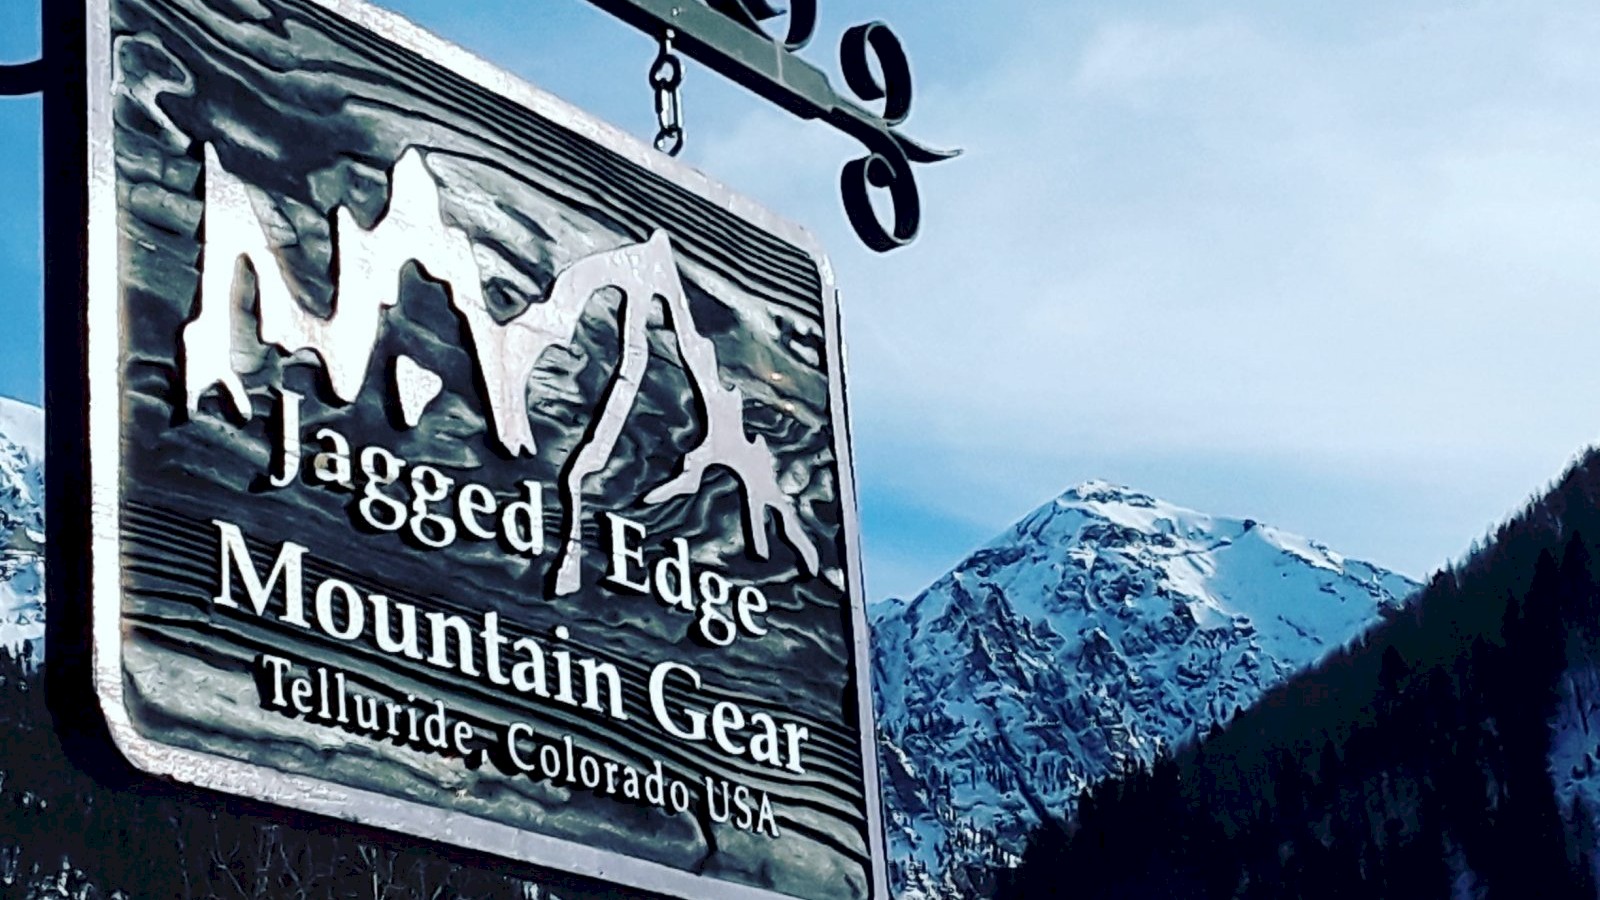 Jagged Edge Mountain Gear